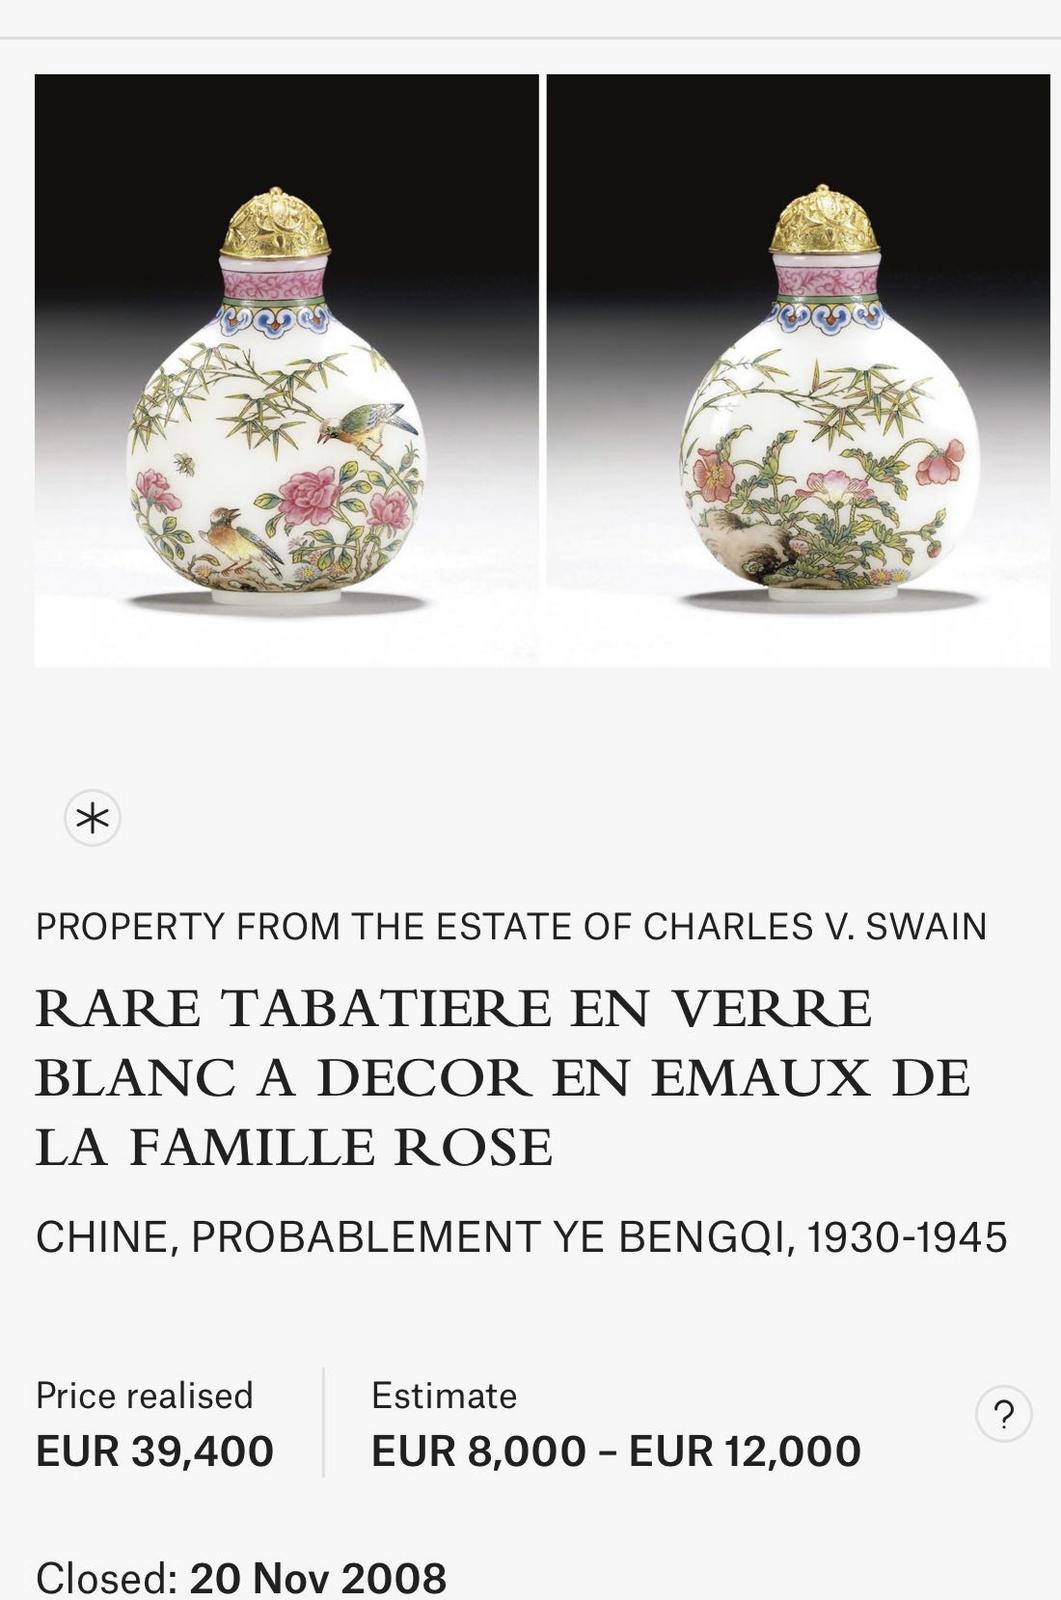 Bonhams : A white glazed soft paste porcelain snuff bottle Wang Bingrong  Style